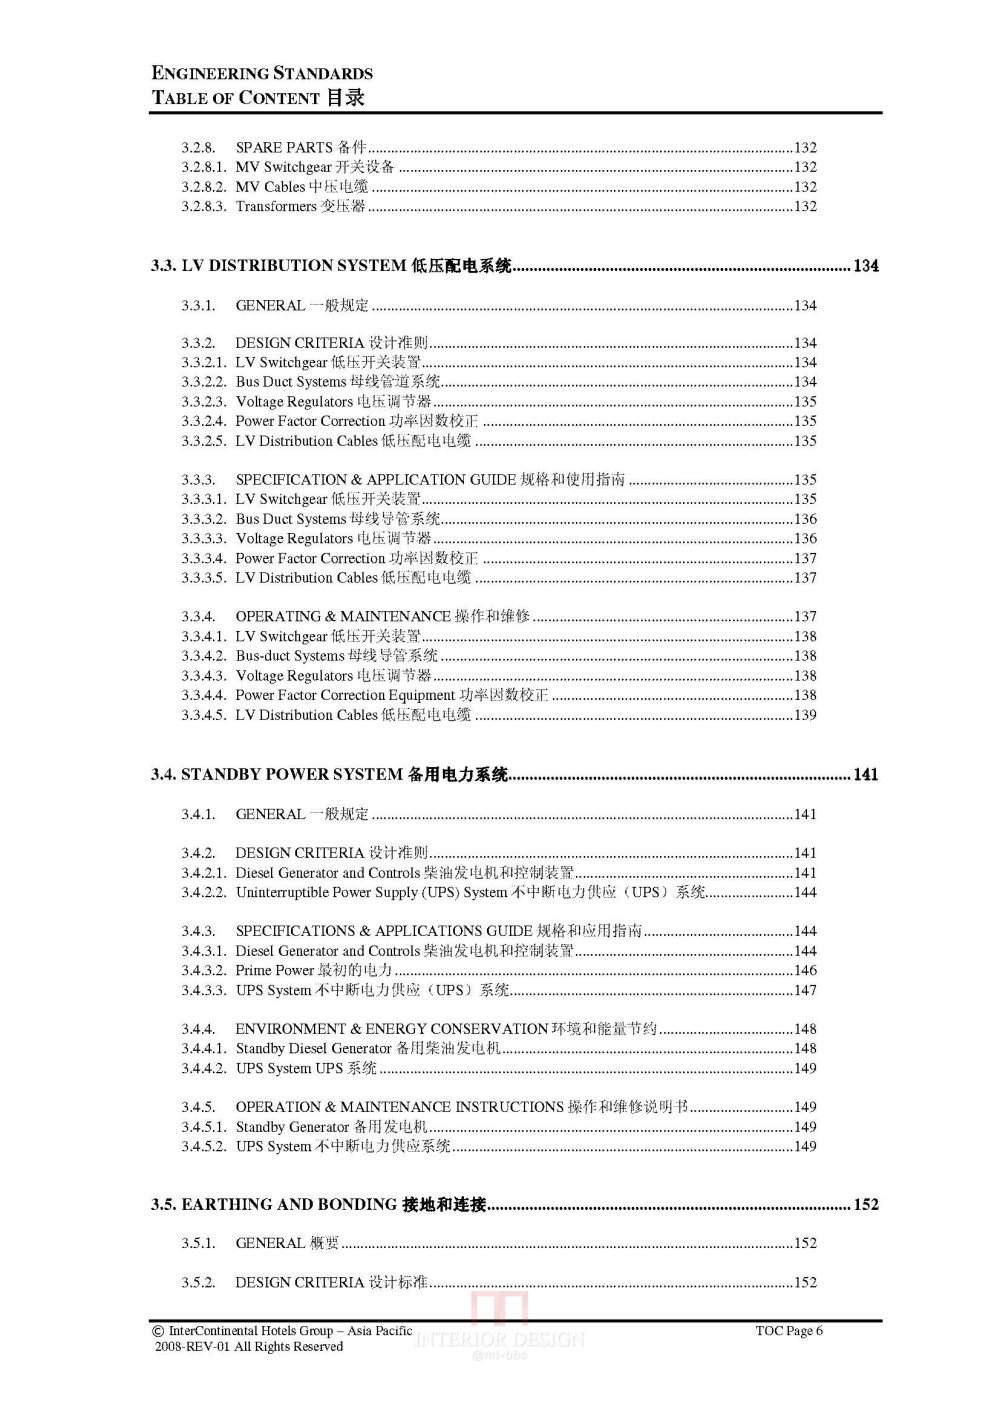 IHG-洲际酒店机电工程设计技术标准(亚太区)_IHG-Engineering Standard 2008_Page_006.jpg